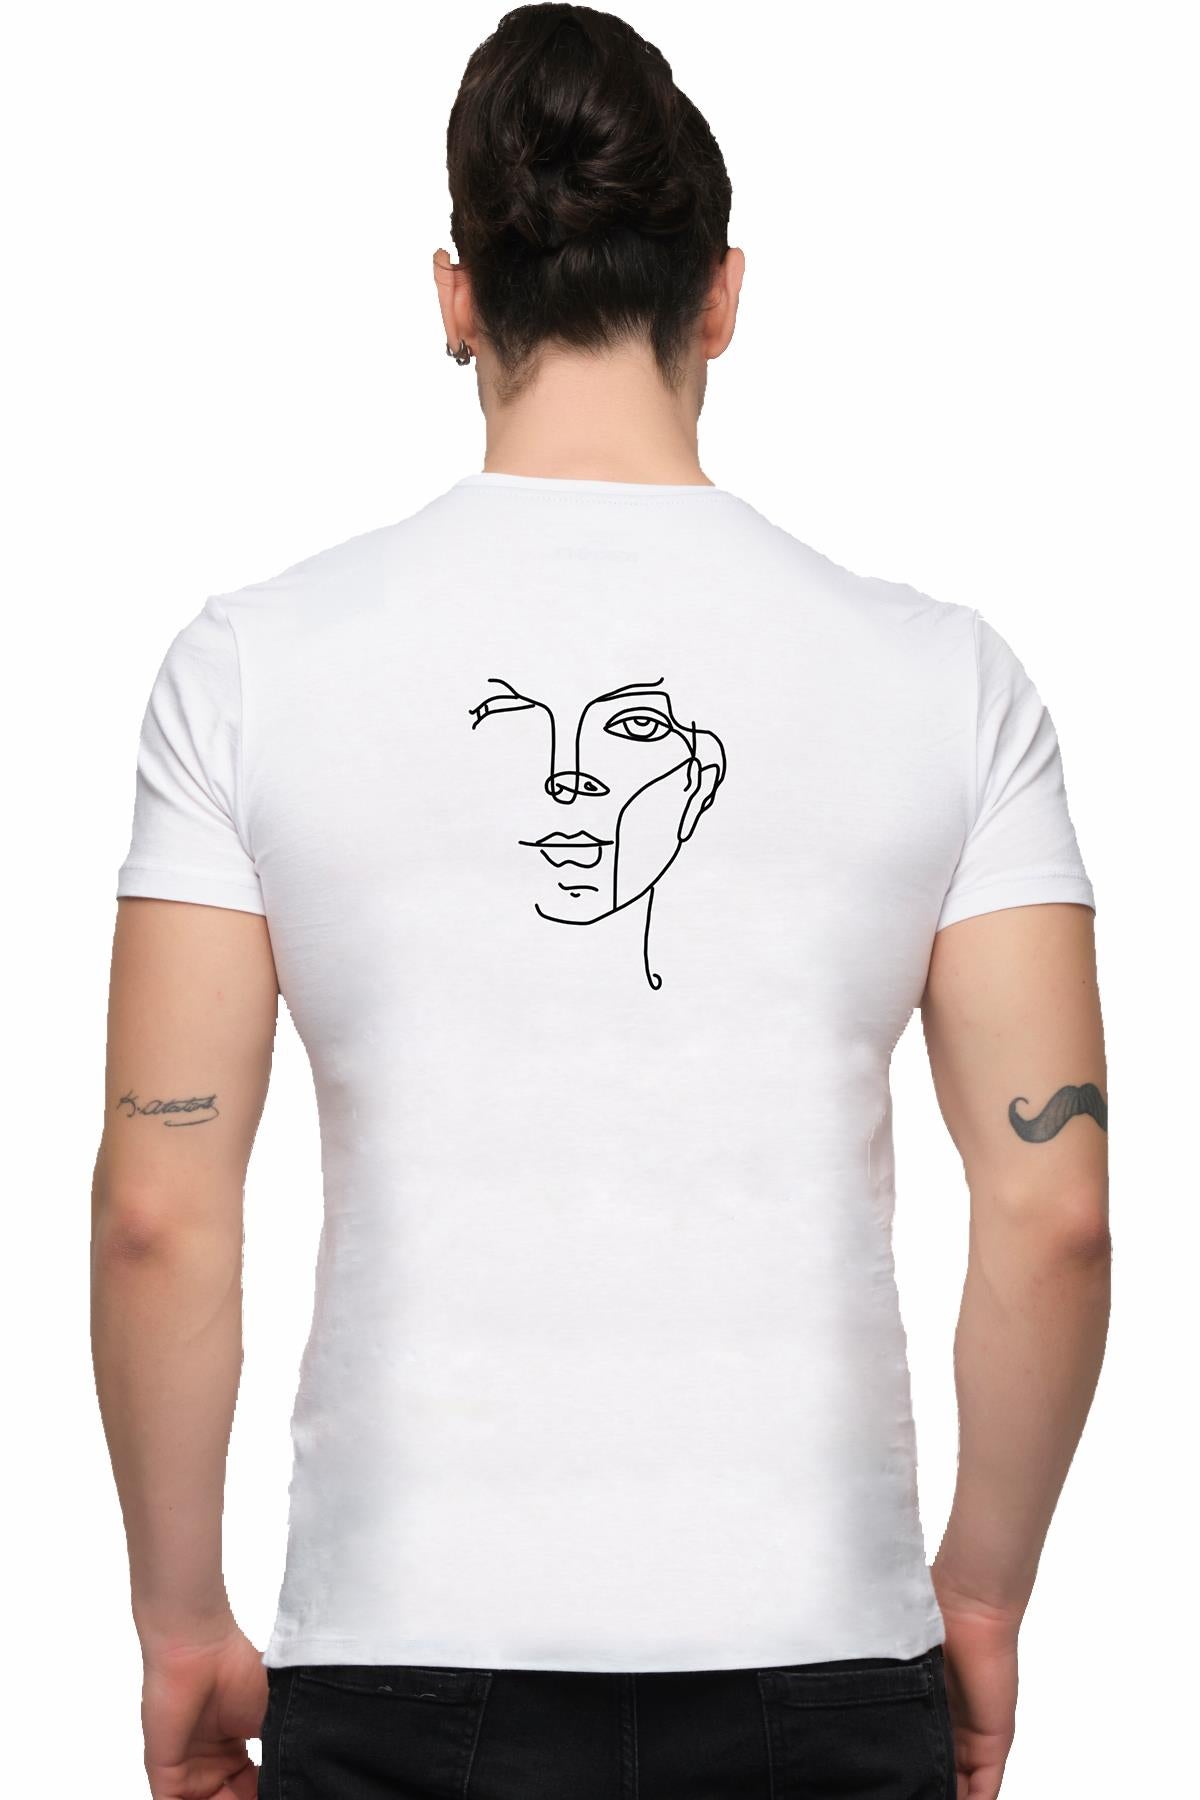 Back Hand Draw Printed Cotton Men's T -shirt